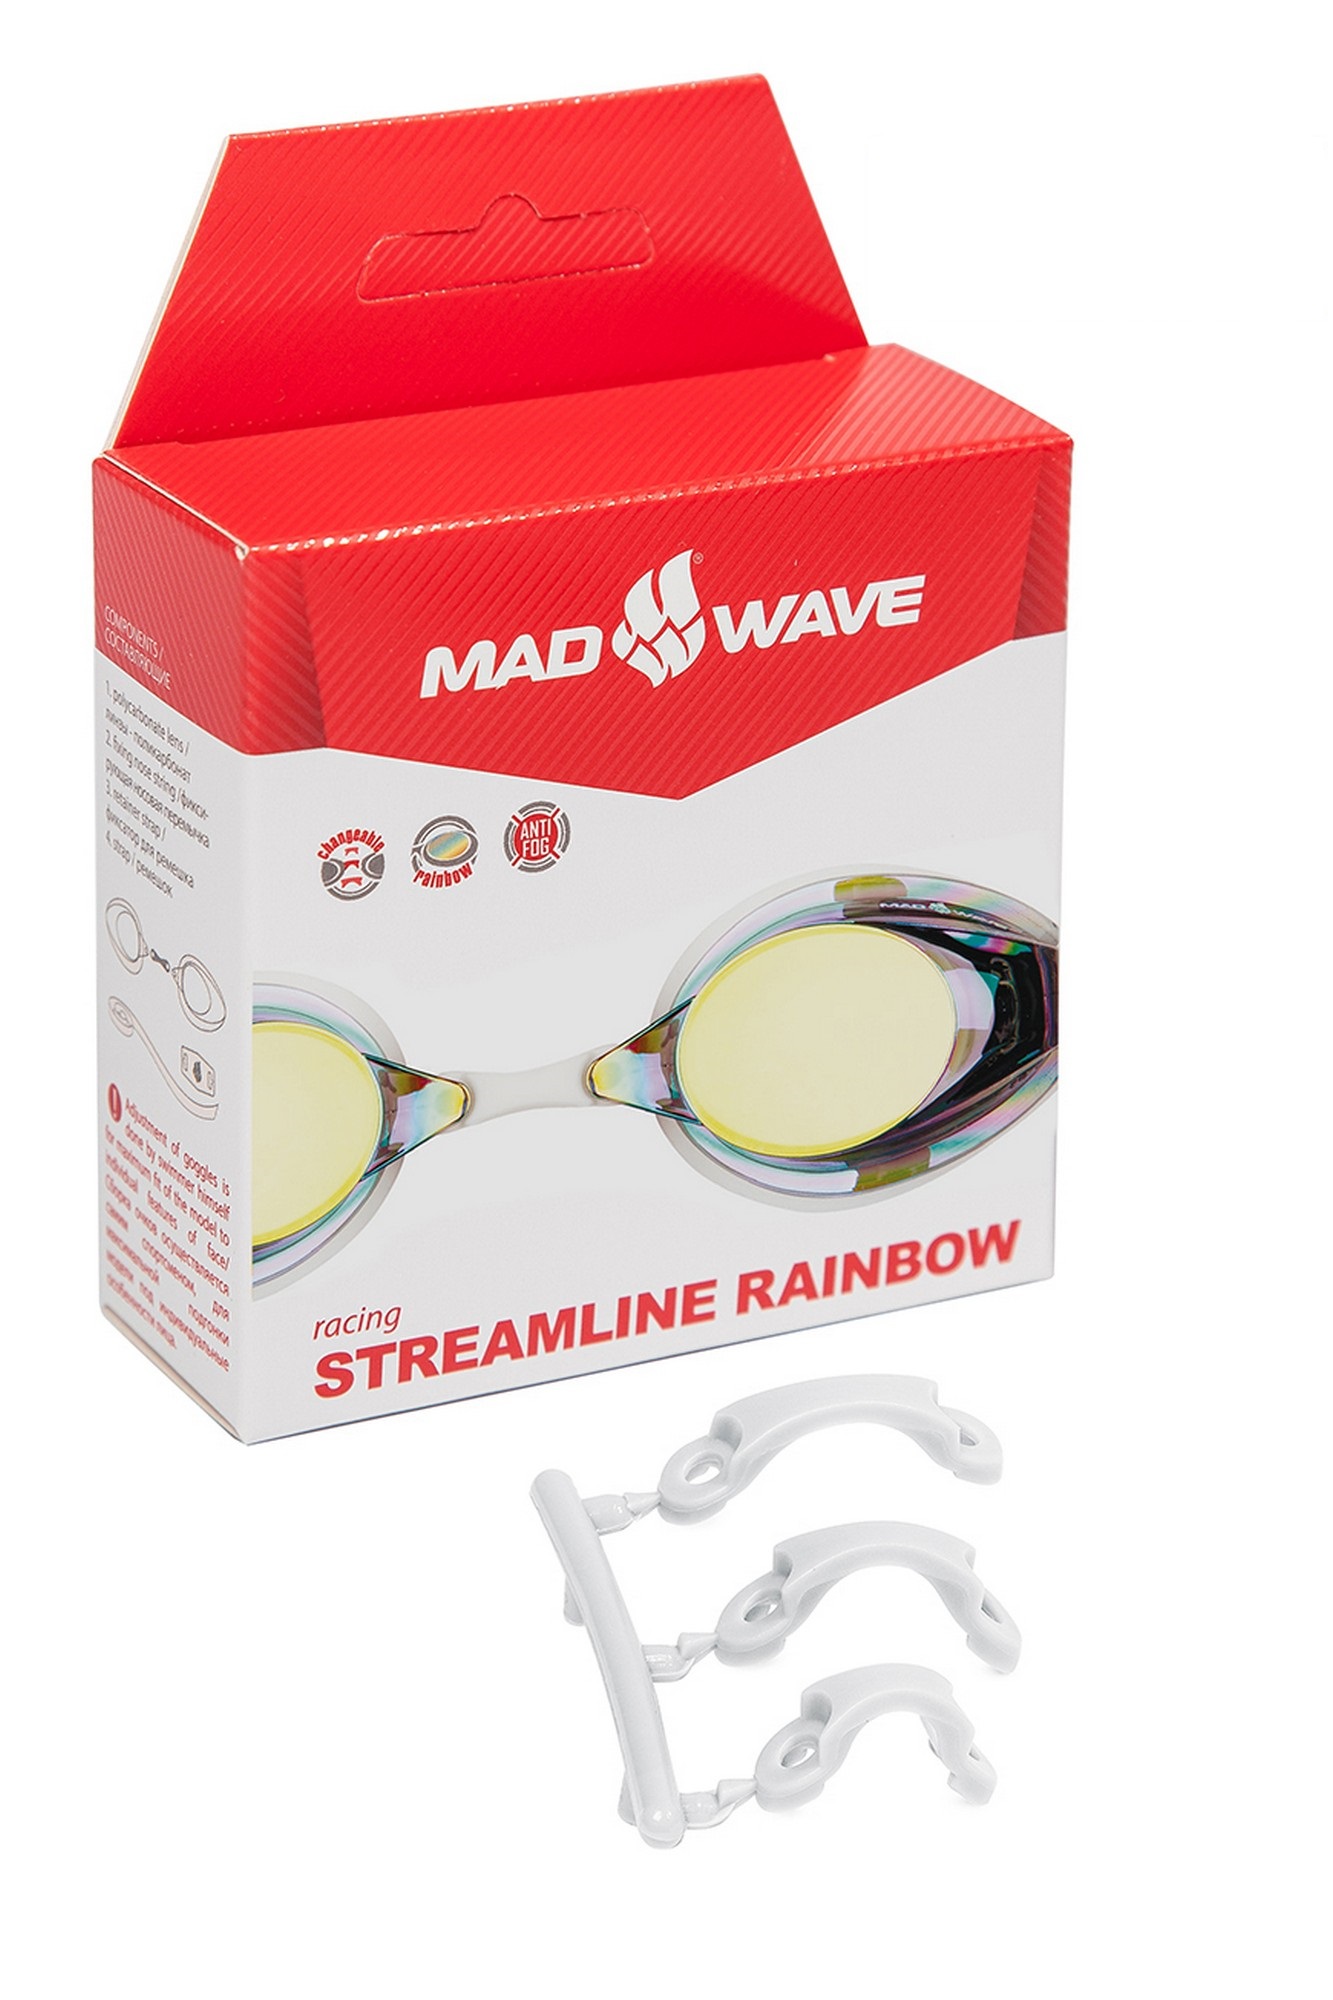 Стартовые очки Mad Wave Streamline Rainbow M0457 03 0 09W пурпурный 1333_2000